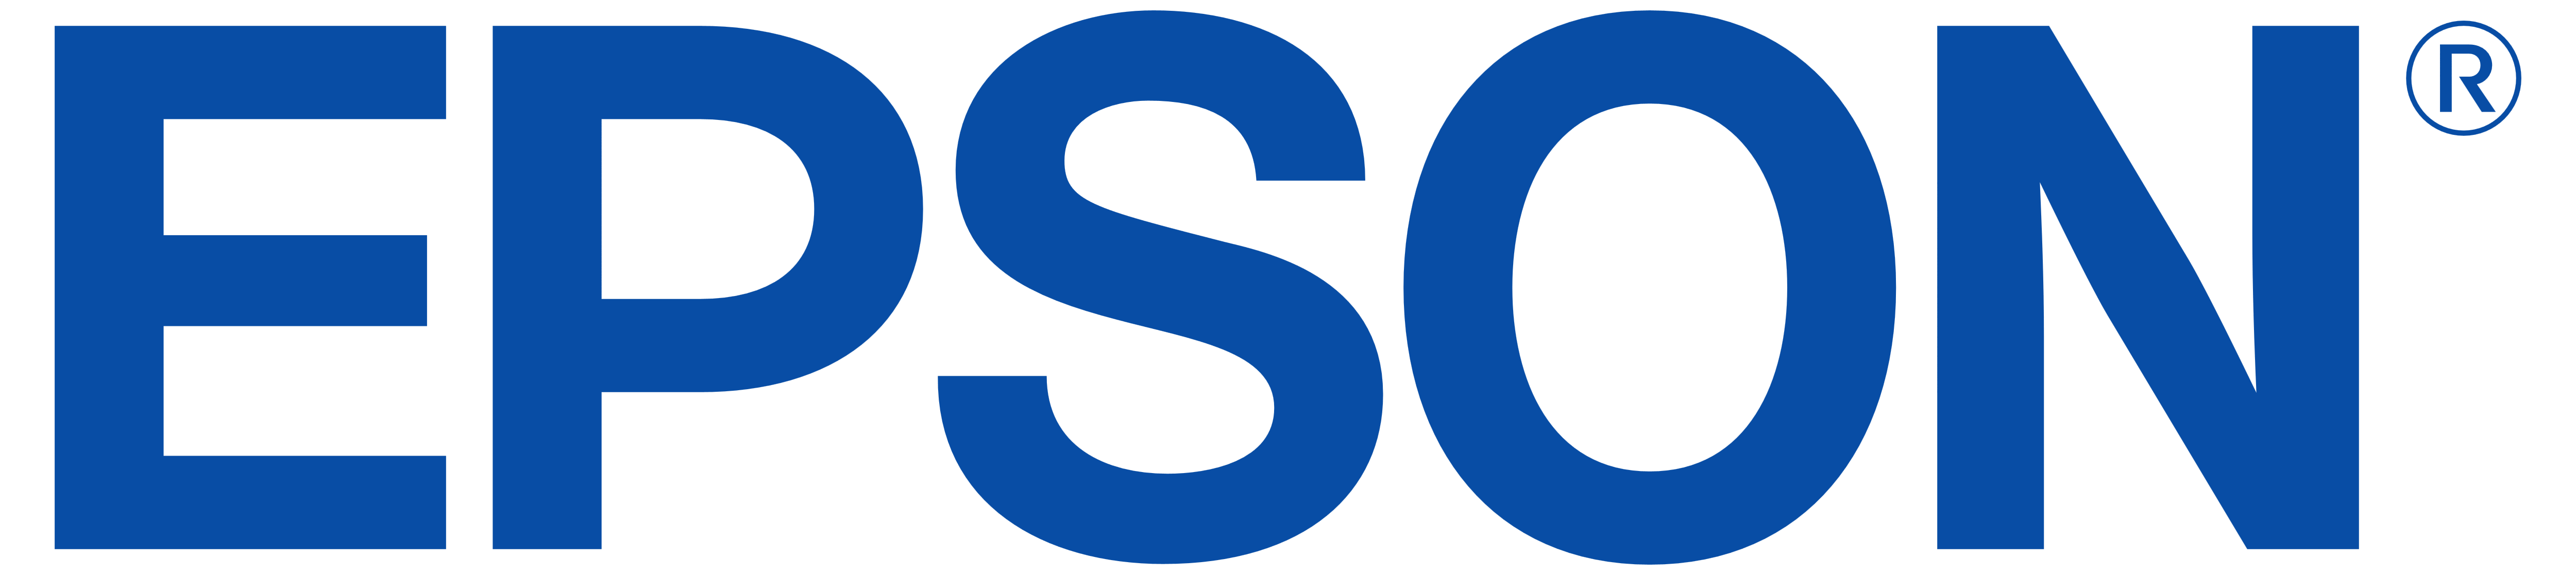 Epson Document Scanners logo